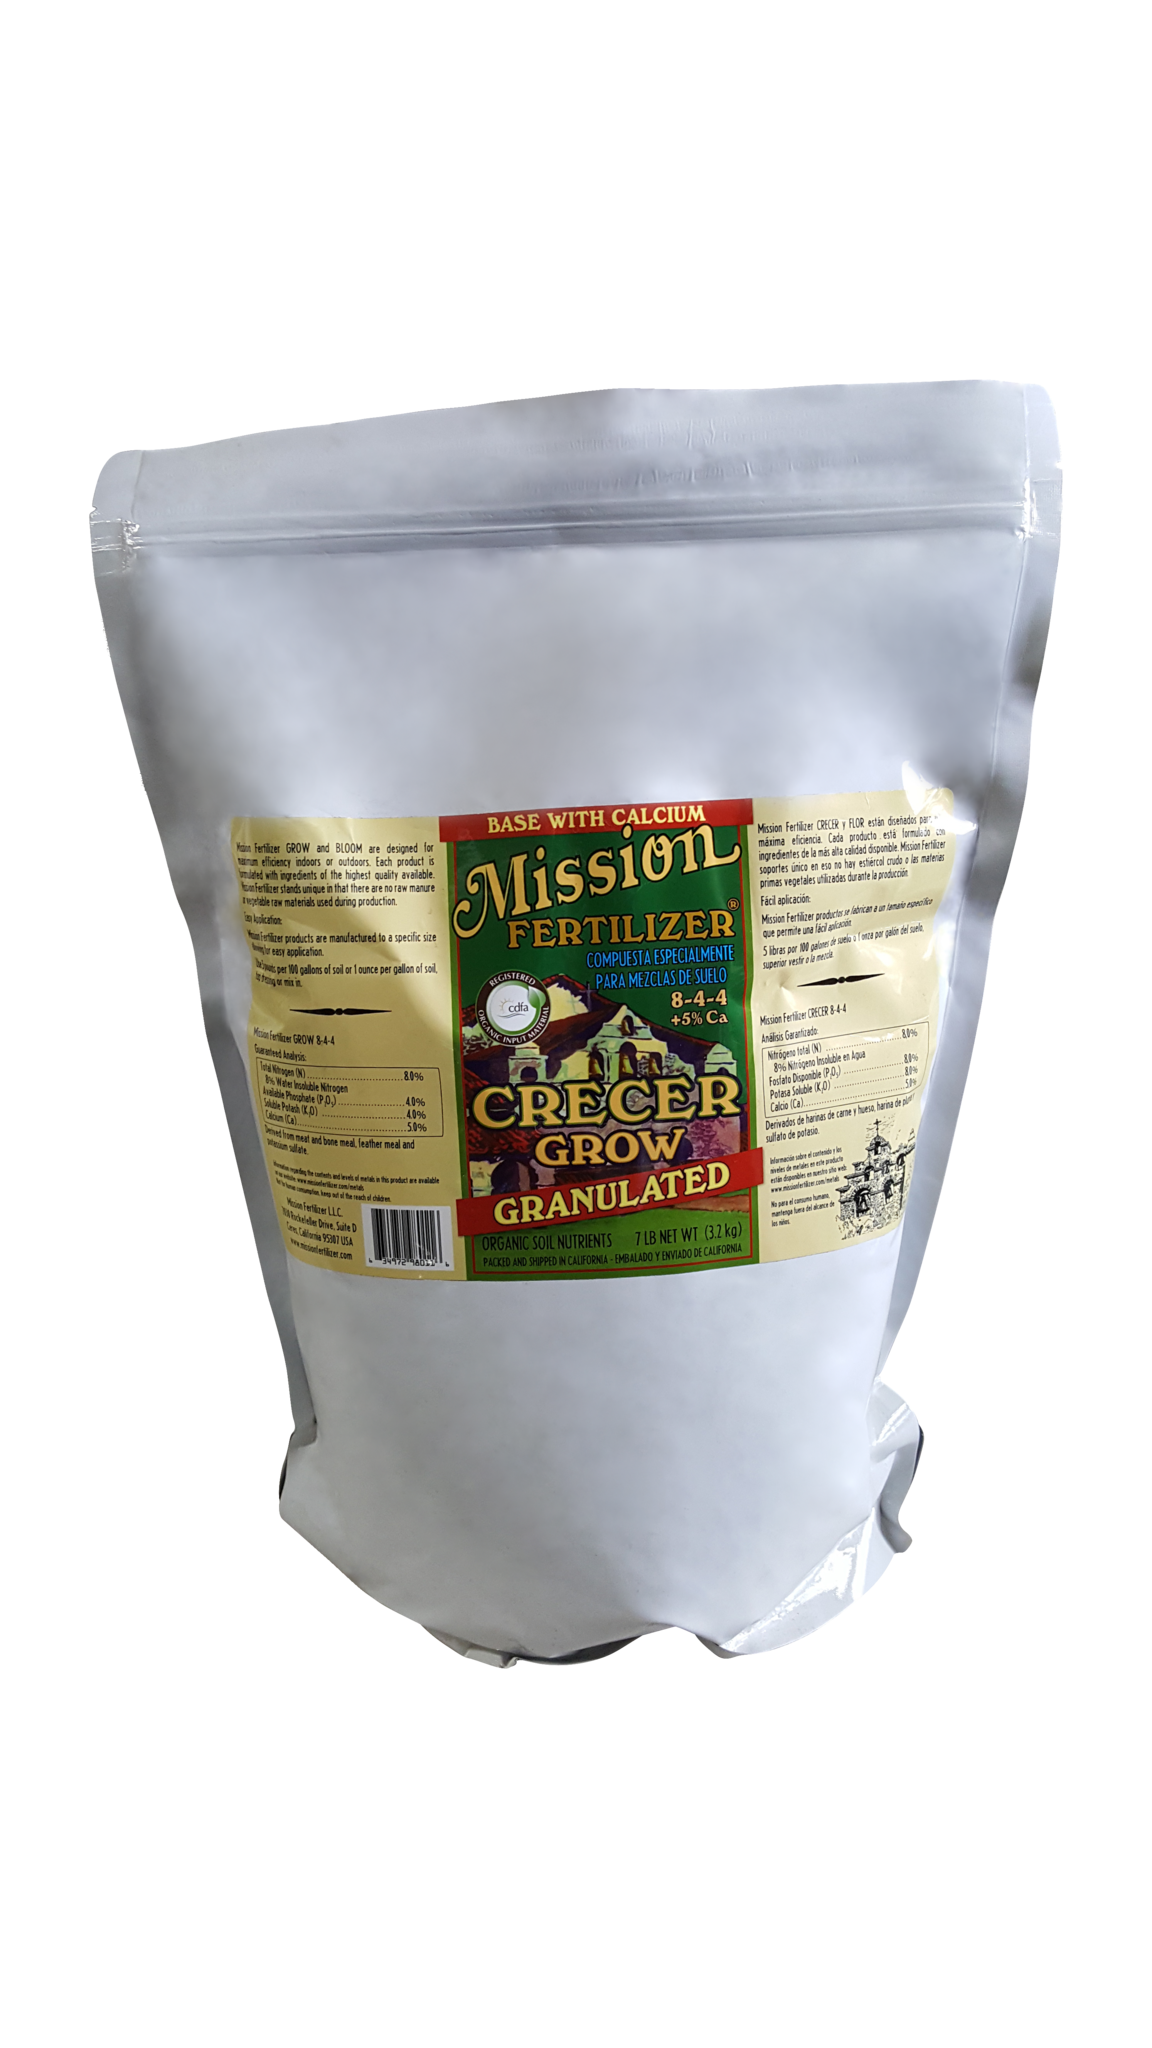 Mission GROW granular with Calcium (7 lb)